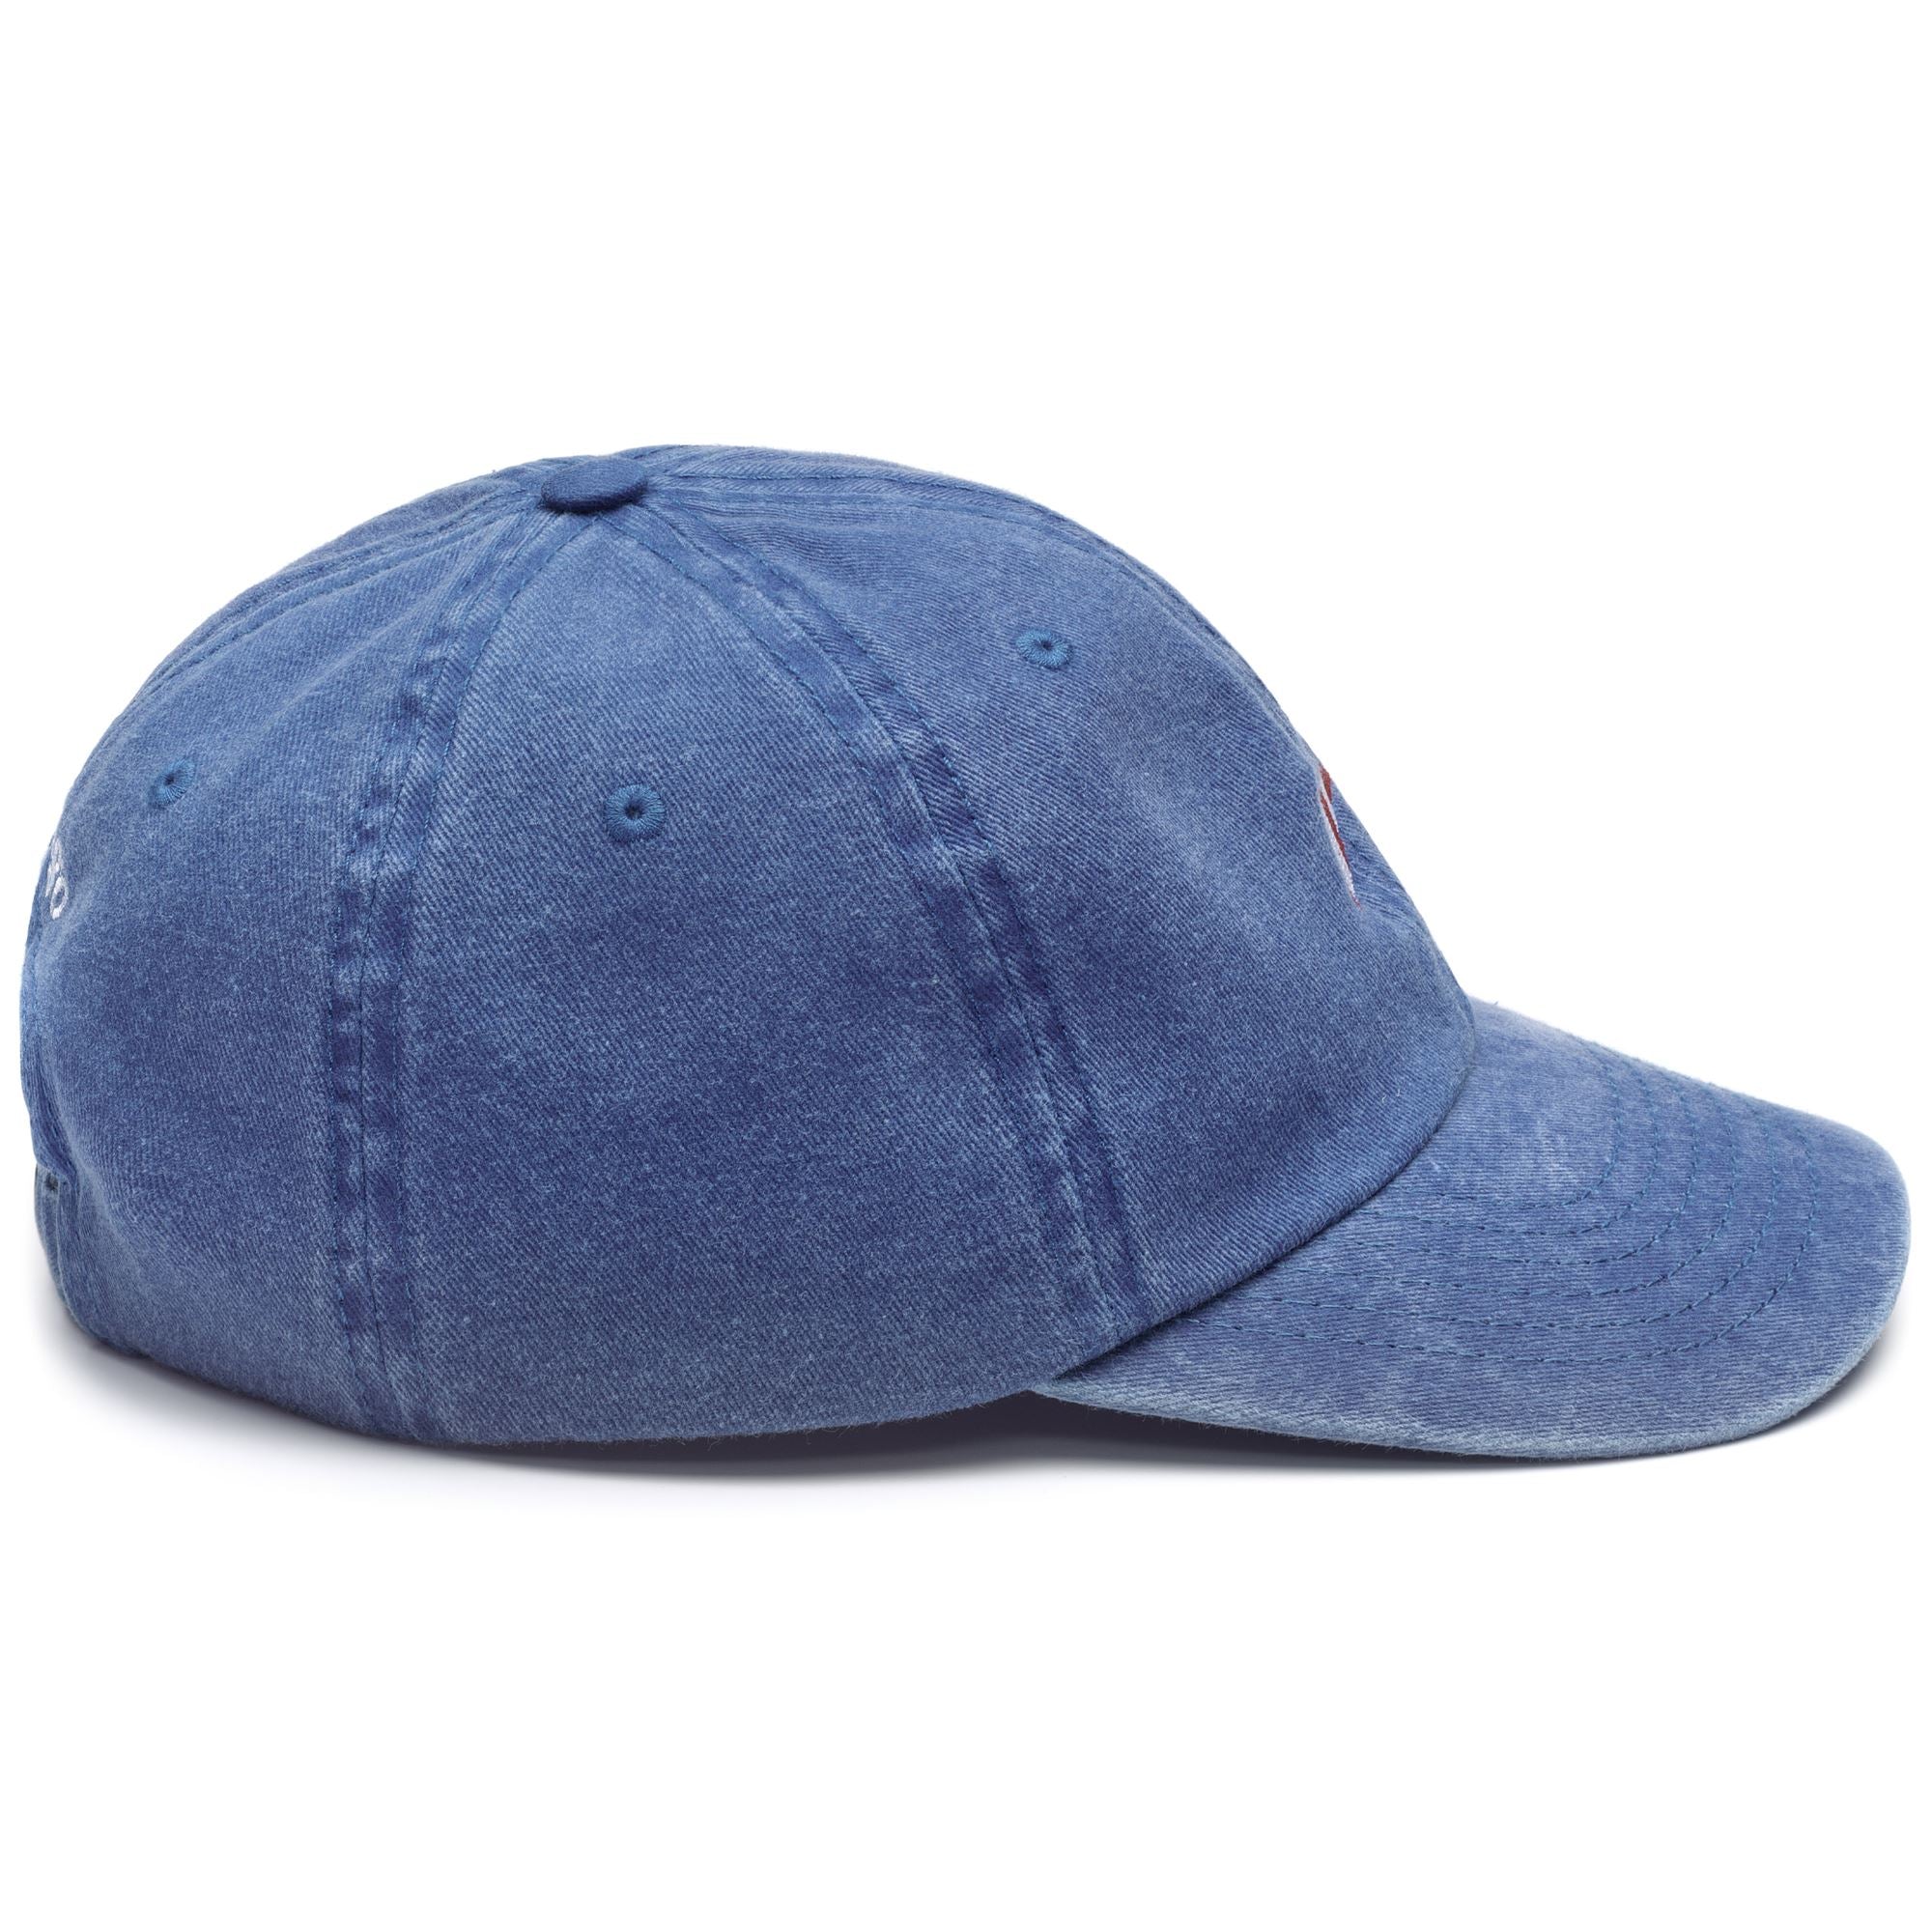 CONNOR PENNANT - Headwear - Cap - Unisex - BLUE VICTORIA